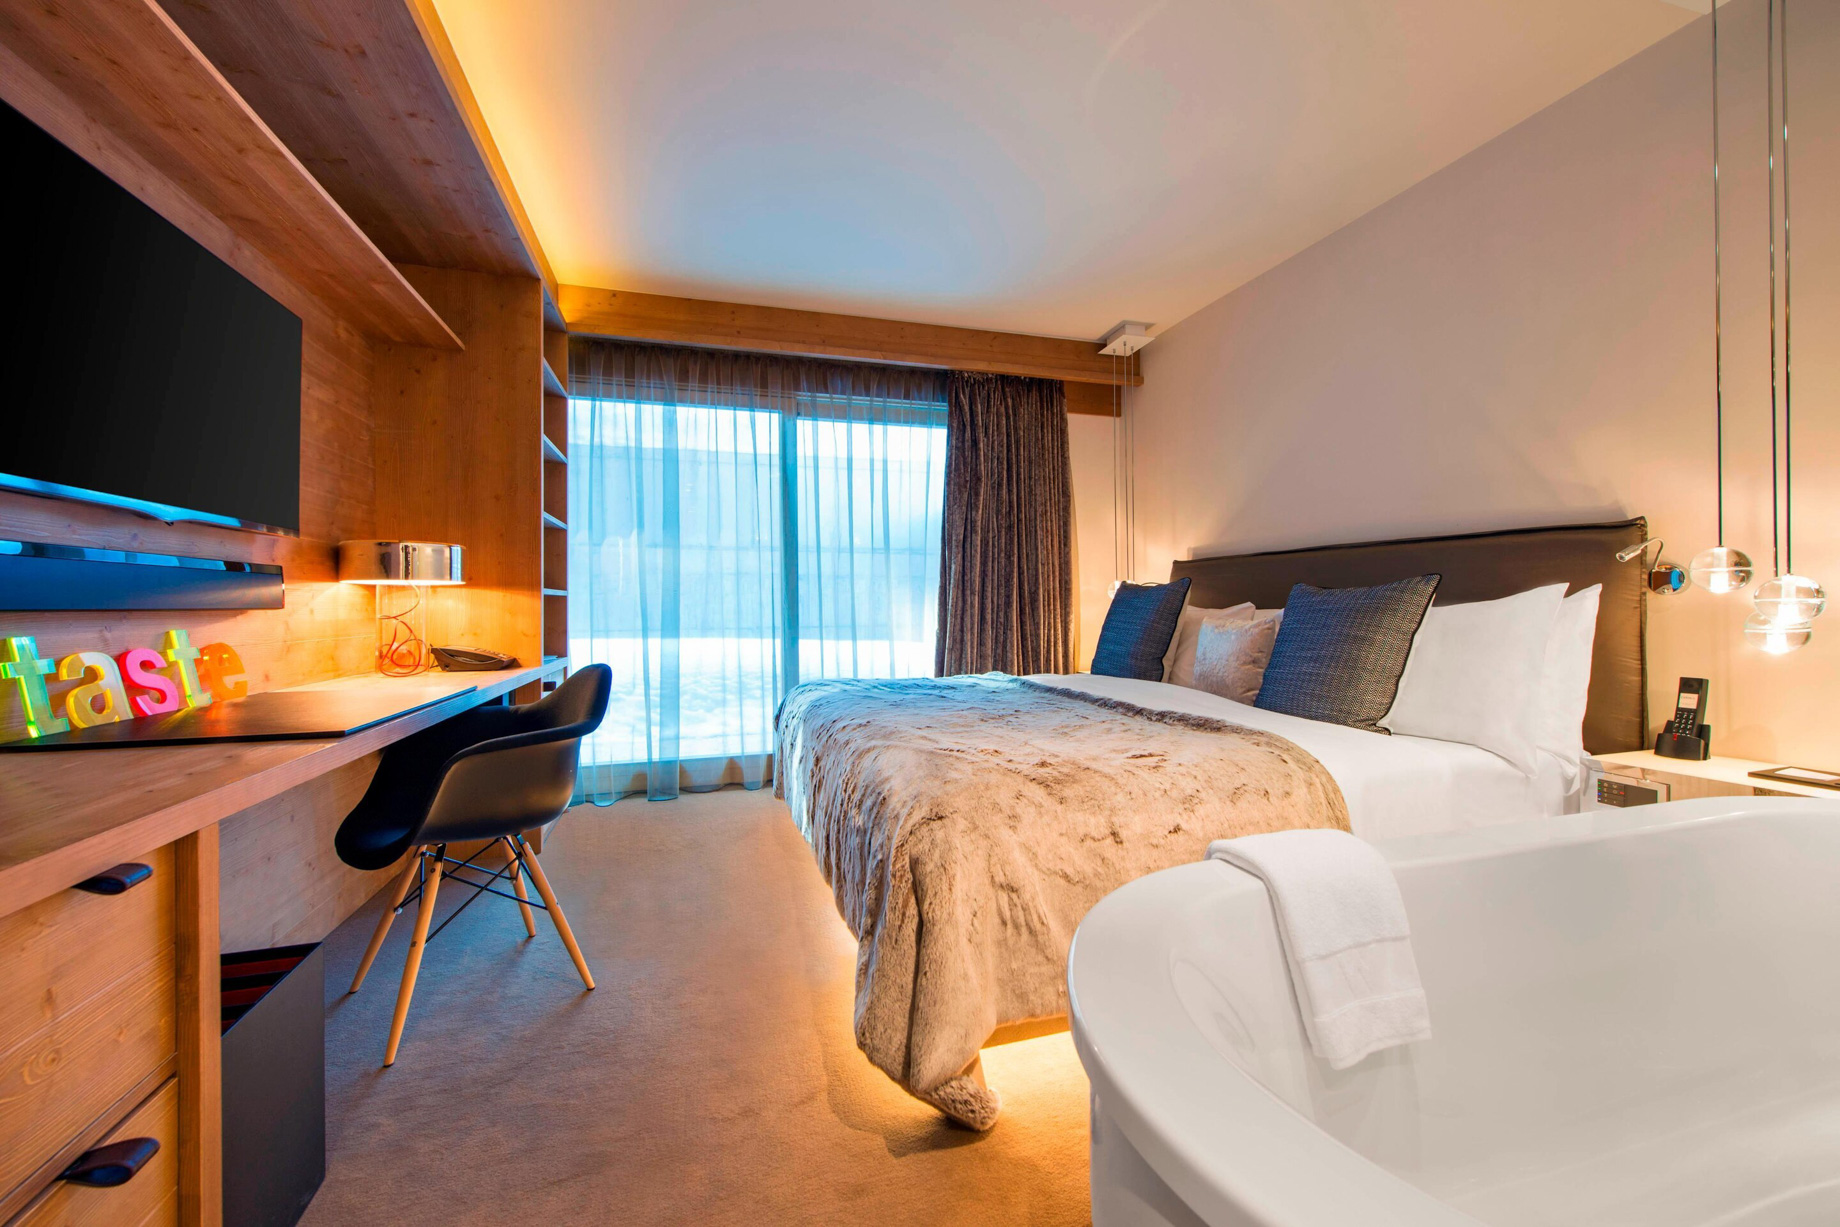 W Verbier Hotel – Verbier, Switzerland – Residence Bedroom Layout